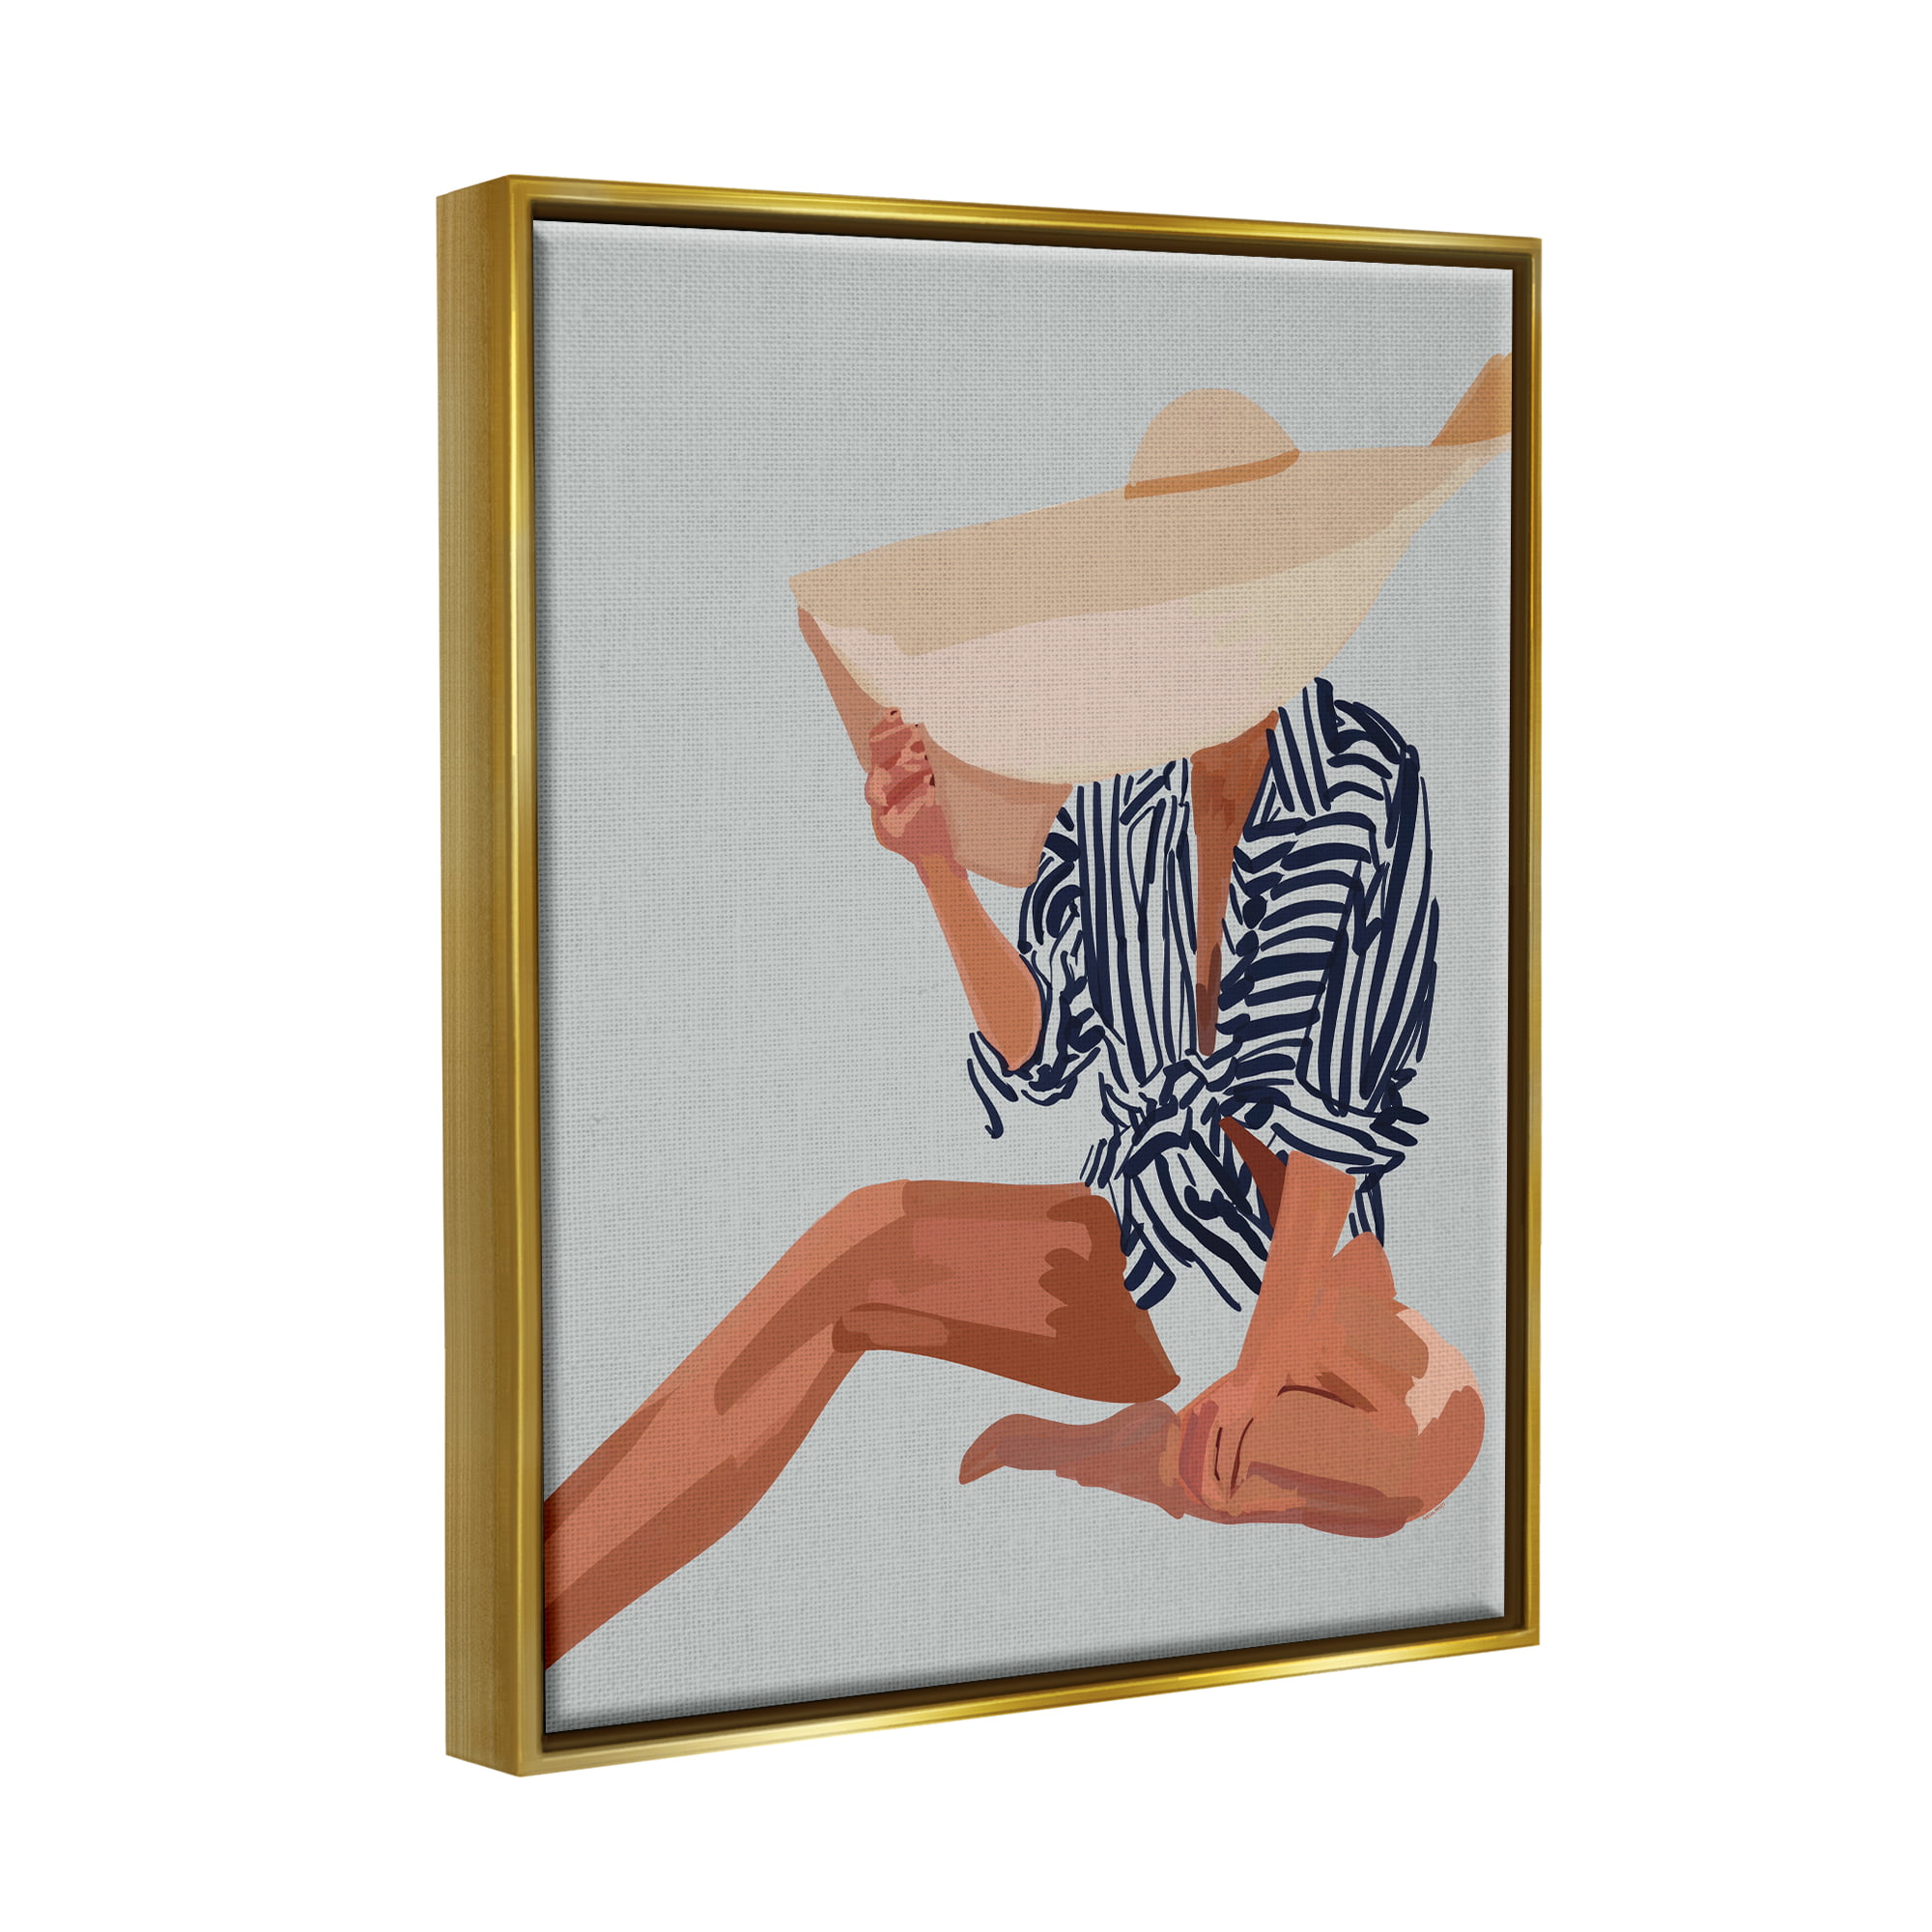 Summertime 2x Matted 14x16 Gold Ornate Framed Art Print by Rosina  Wachtmeister 